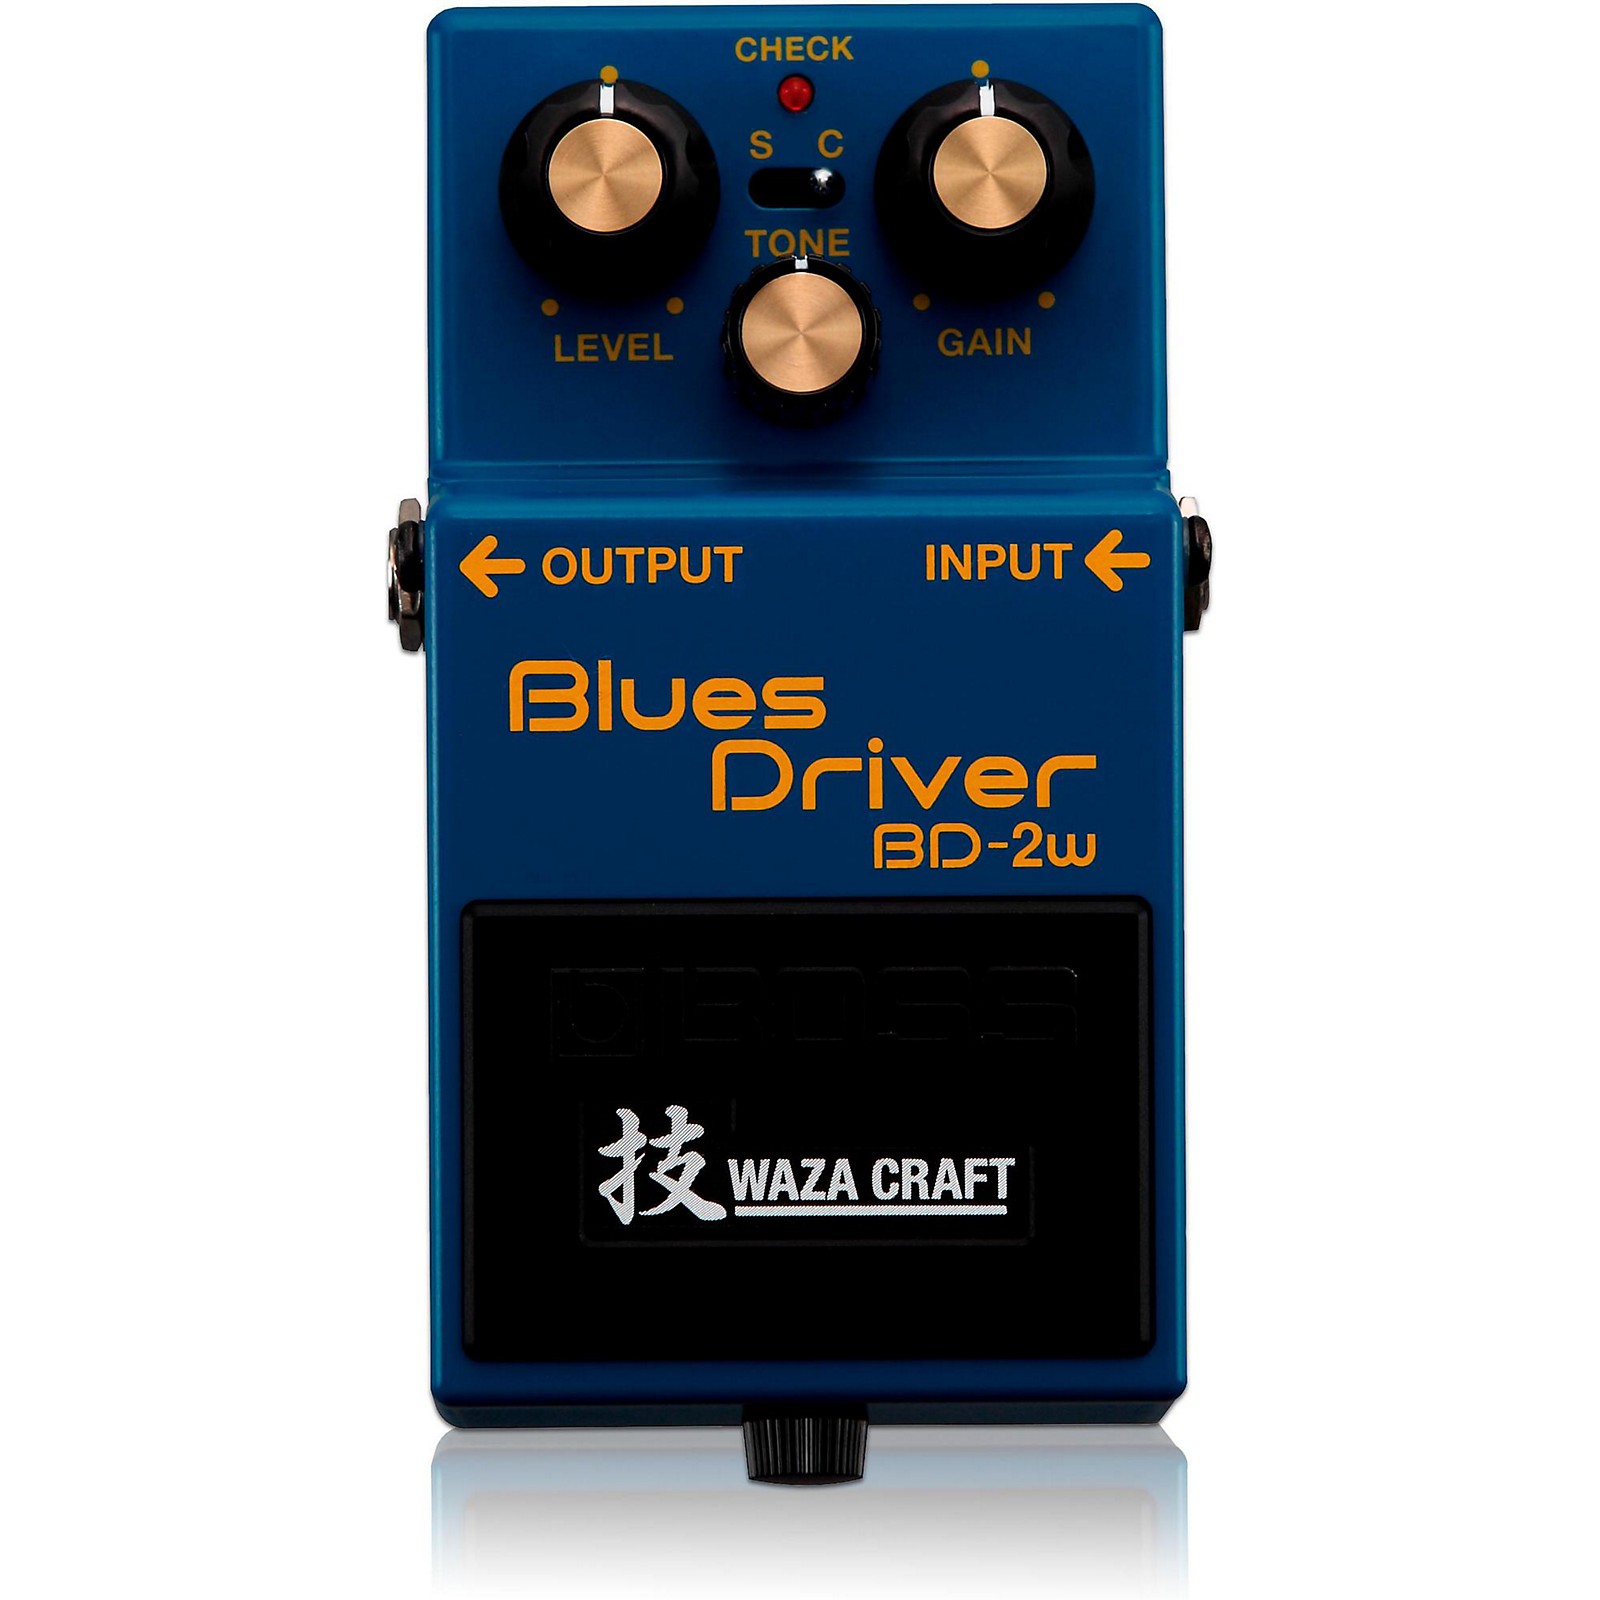 BOSS BD-2W Blues Driver Waza Craft Guitar Effects Pedal